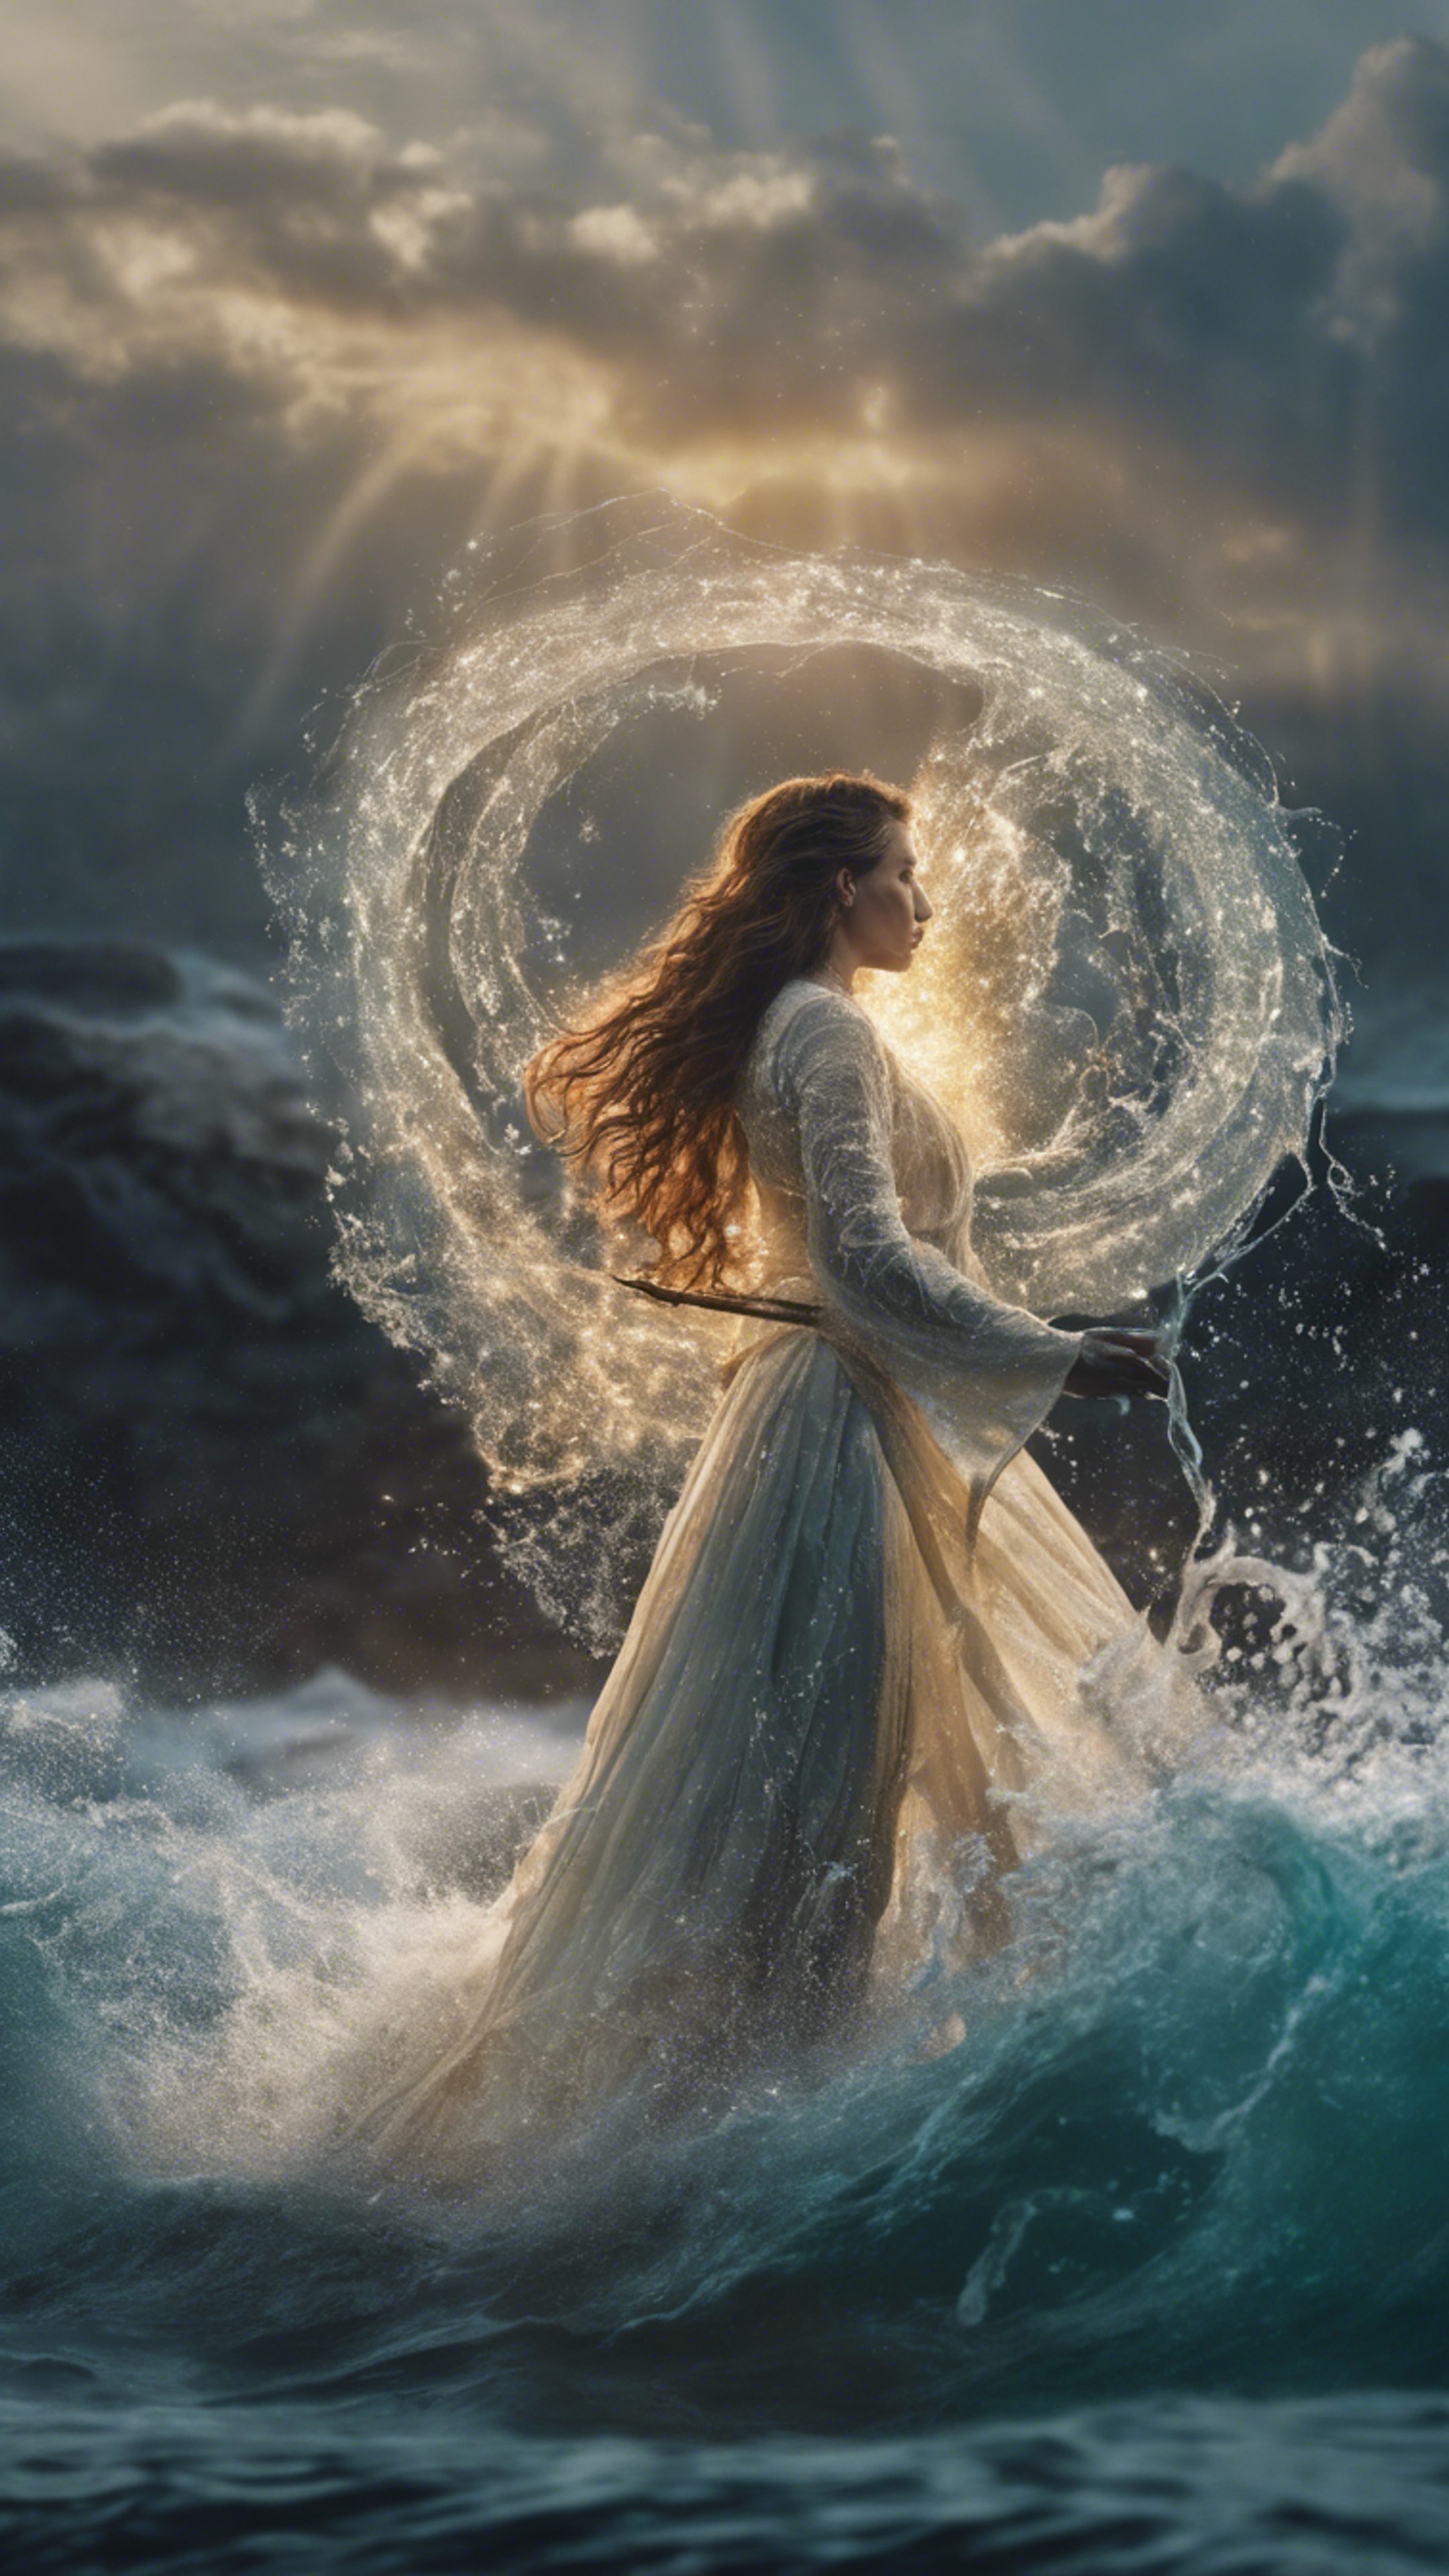 A magical woman weaving a spell that turns waves in an ocean into a gigantic water dragon. Tapéta[497501a1a9a040e18b41]